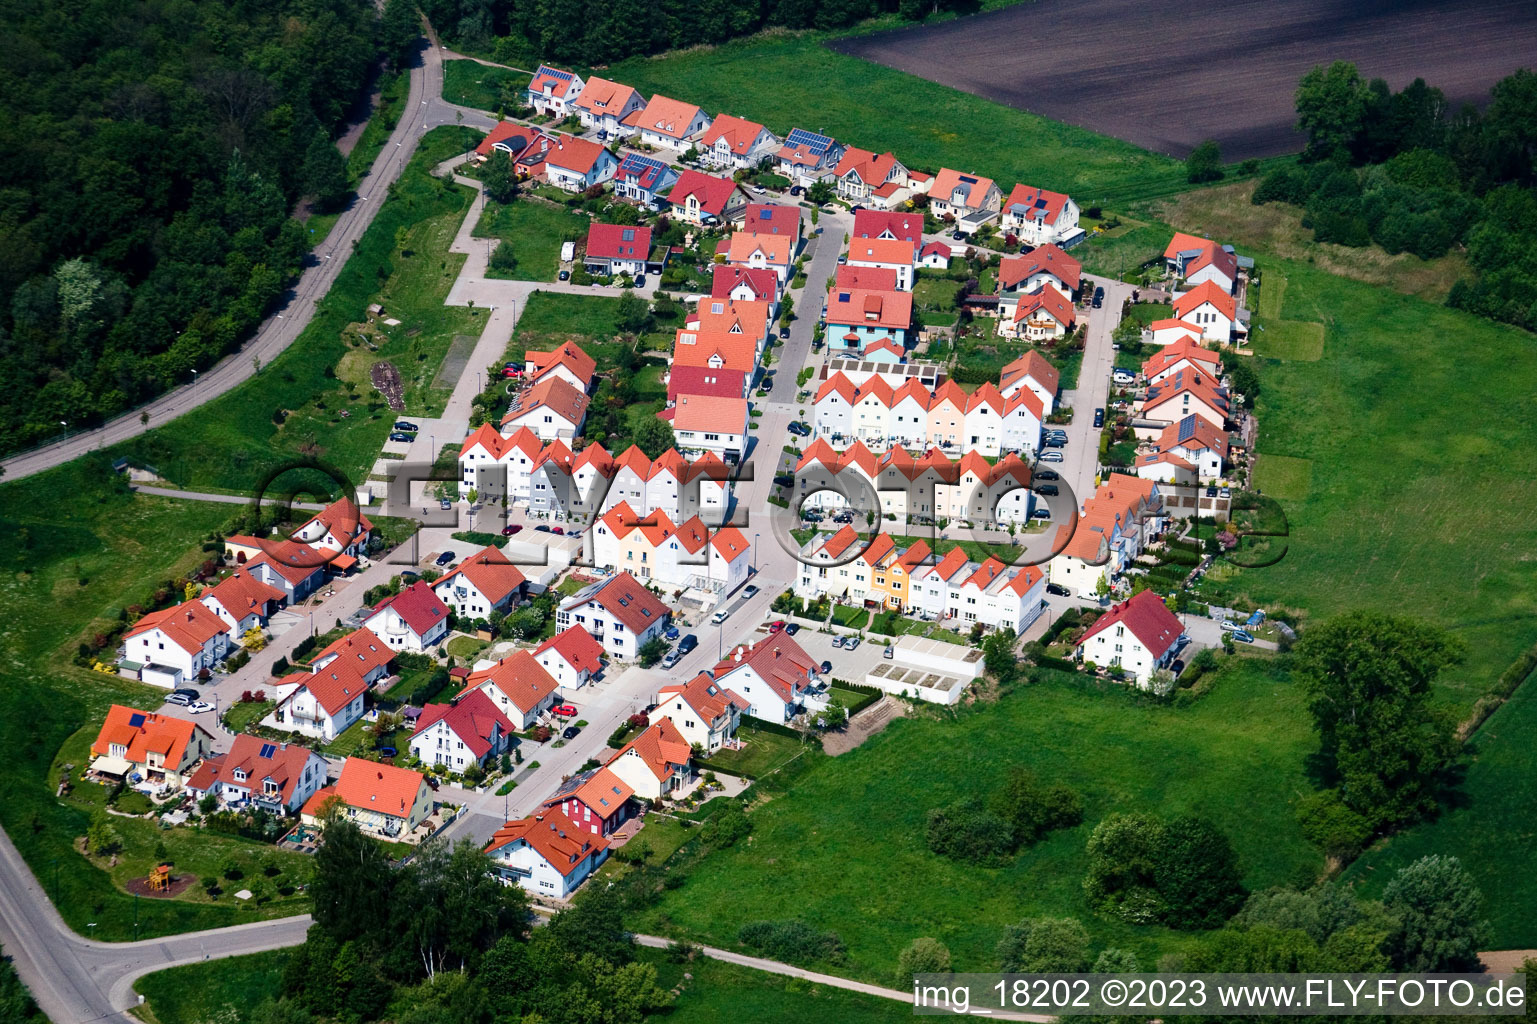 Bird's eye view of New development area in Wörth am Rhein in the state Rhineland-Palatinate, Germany